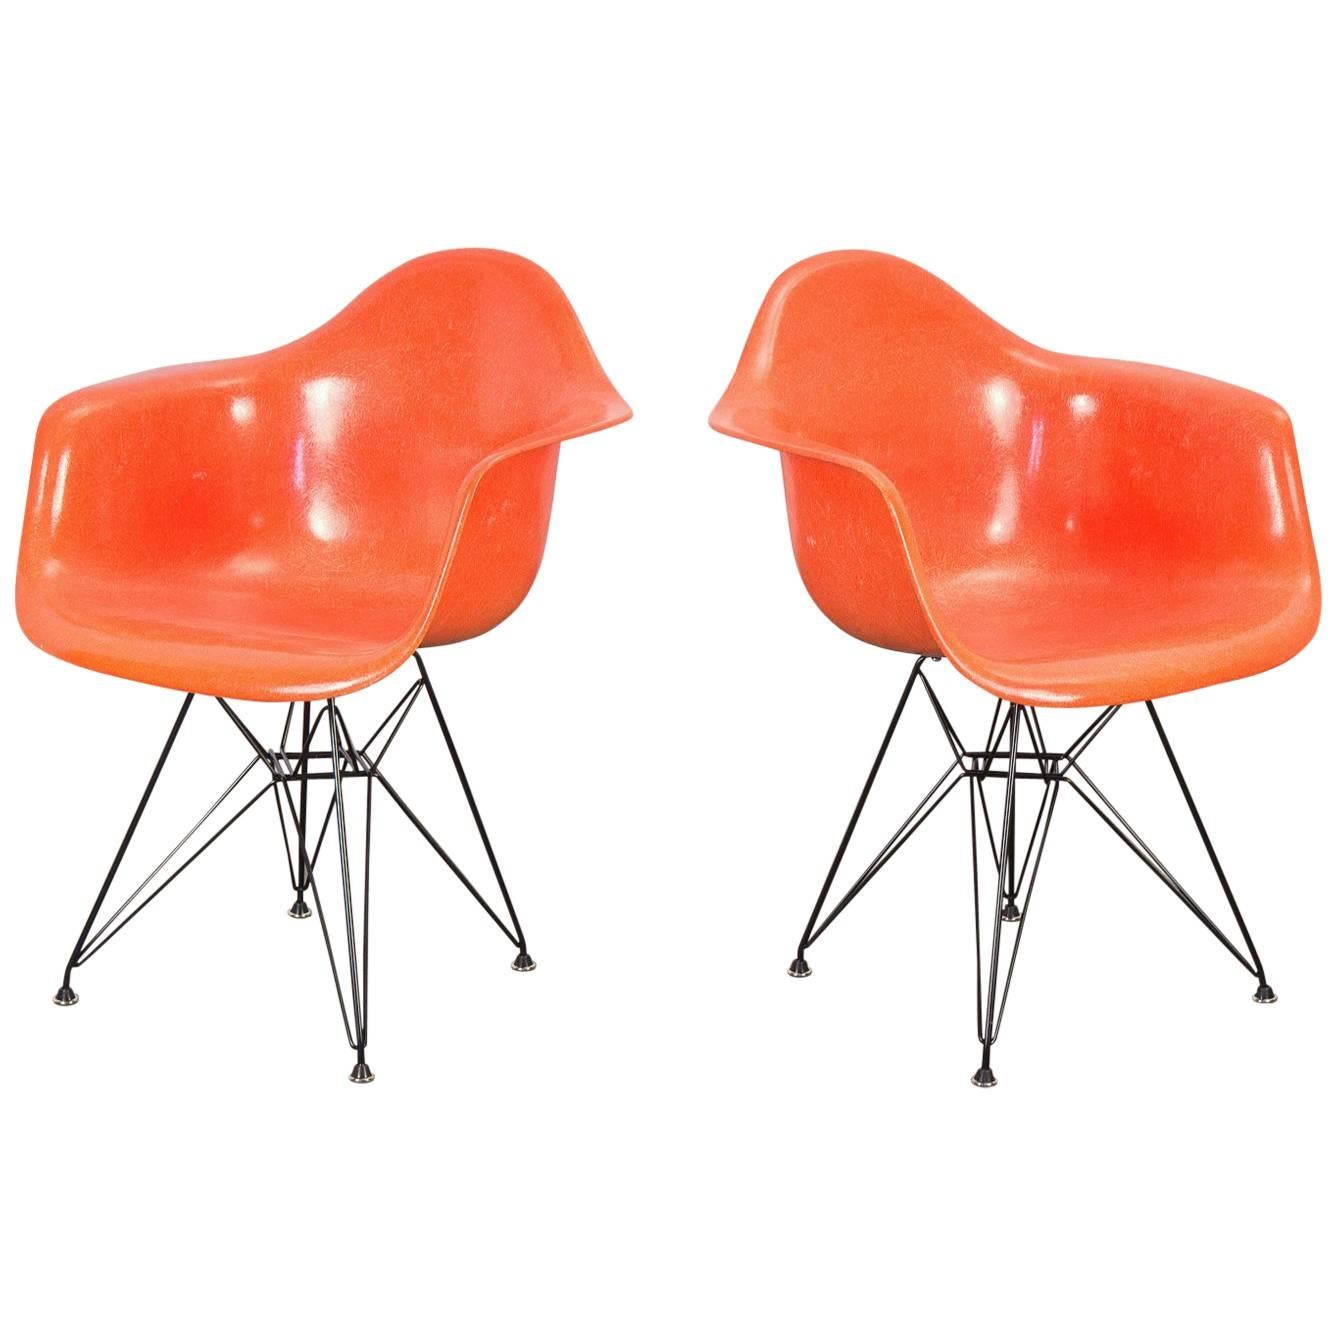 Pair of Orange Eames Armchair Shells